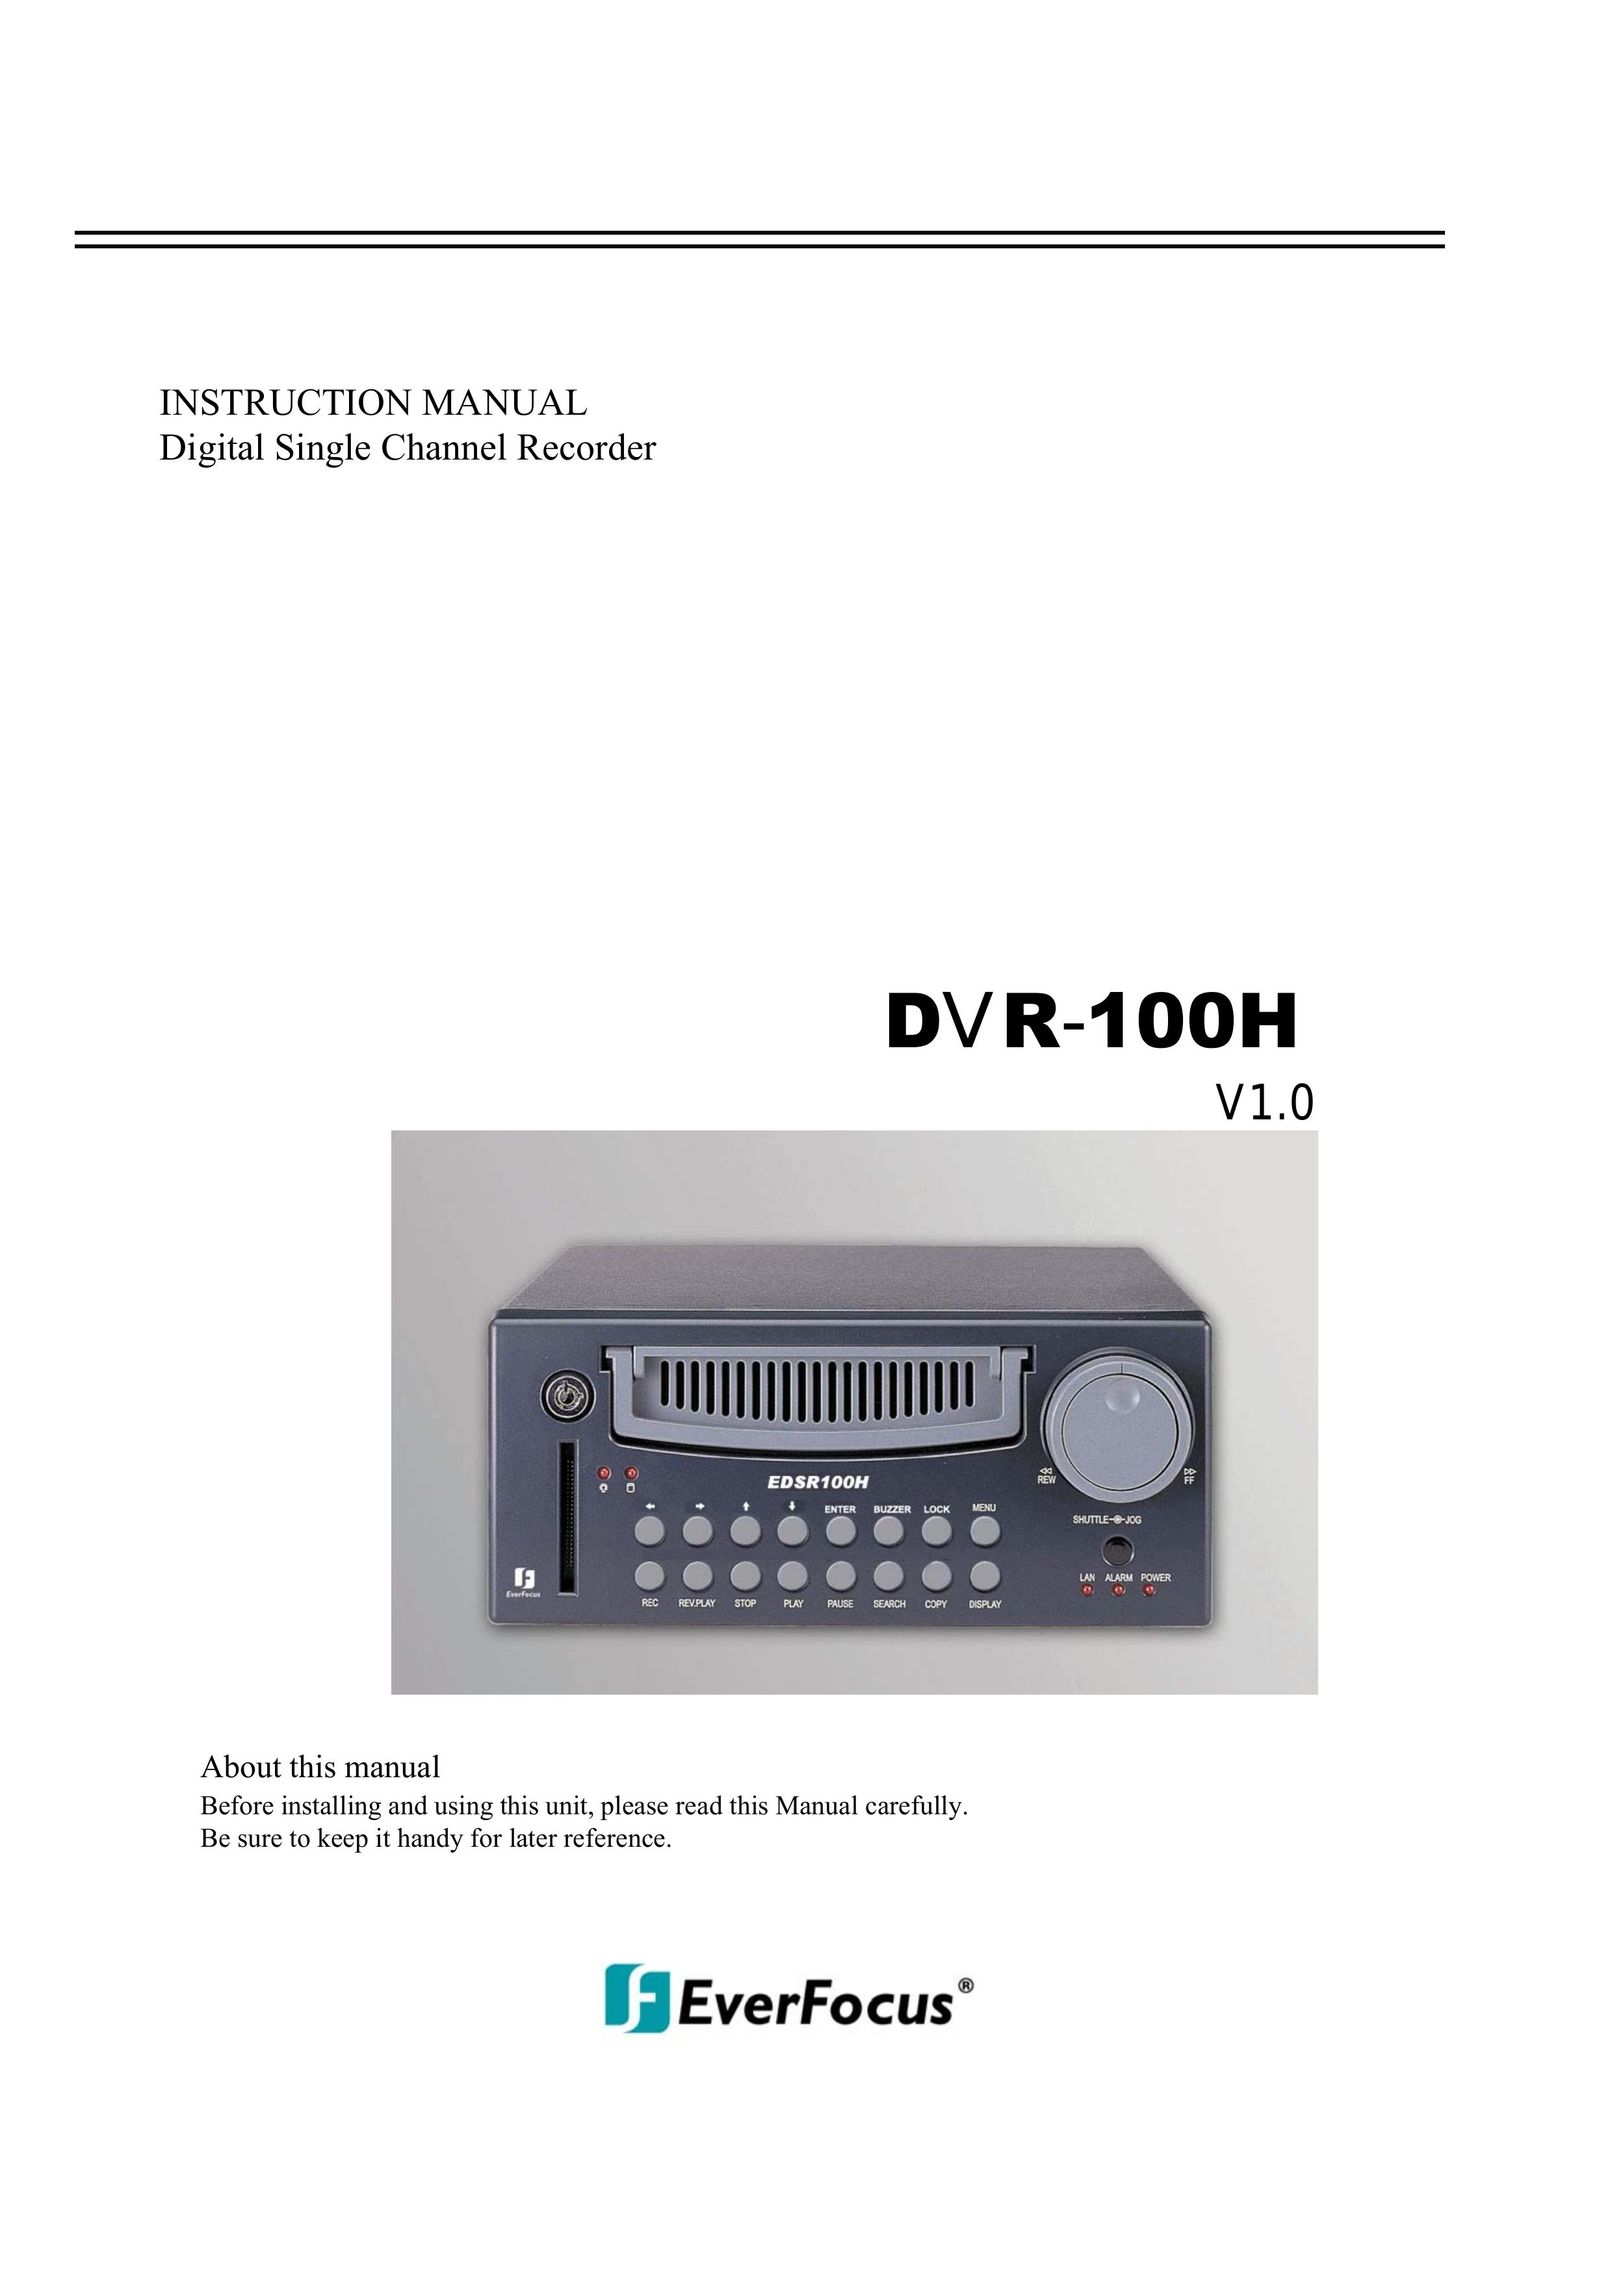 EverFocus DVR-100H DVR User Manual